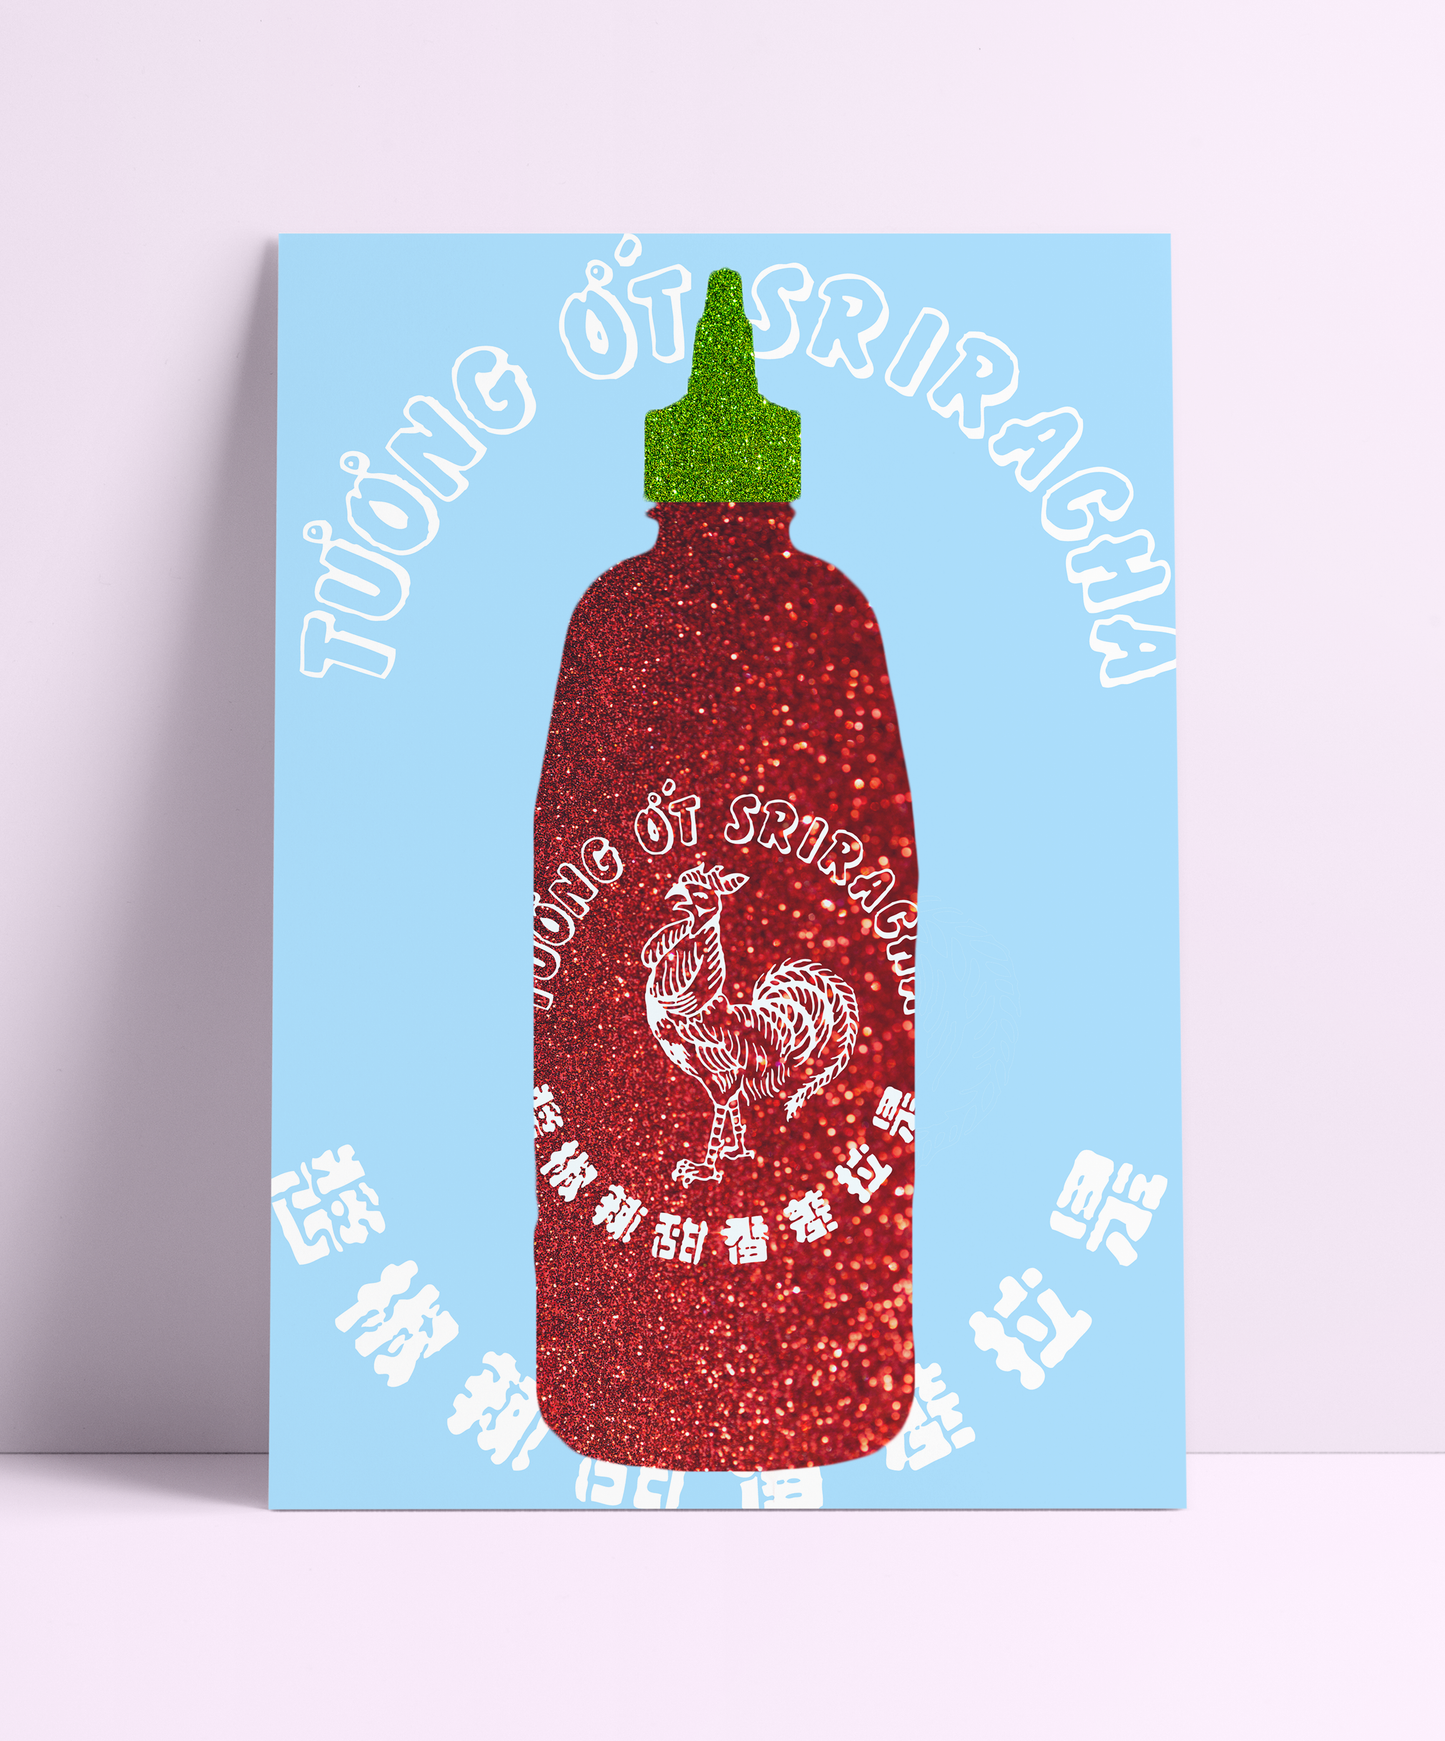 Sriracha Sauce Wall Print - PrintedWeird